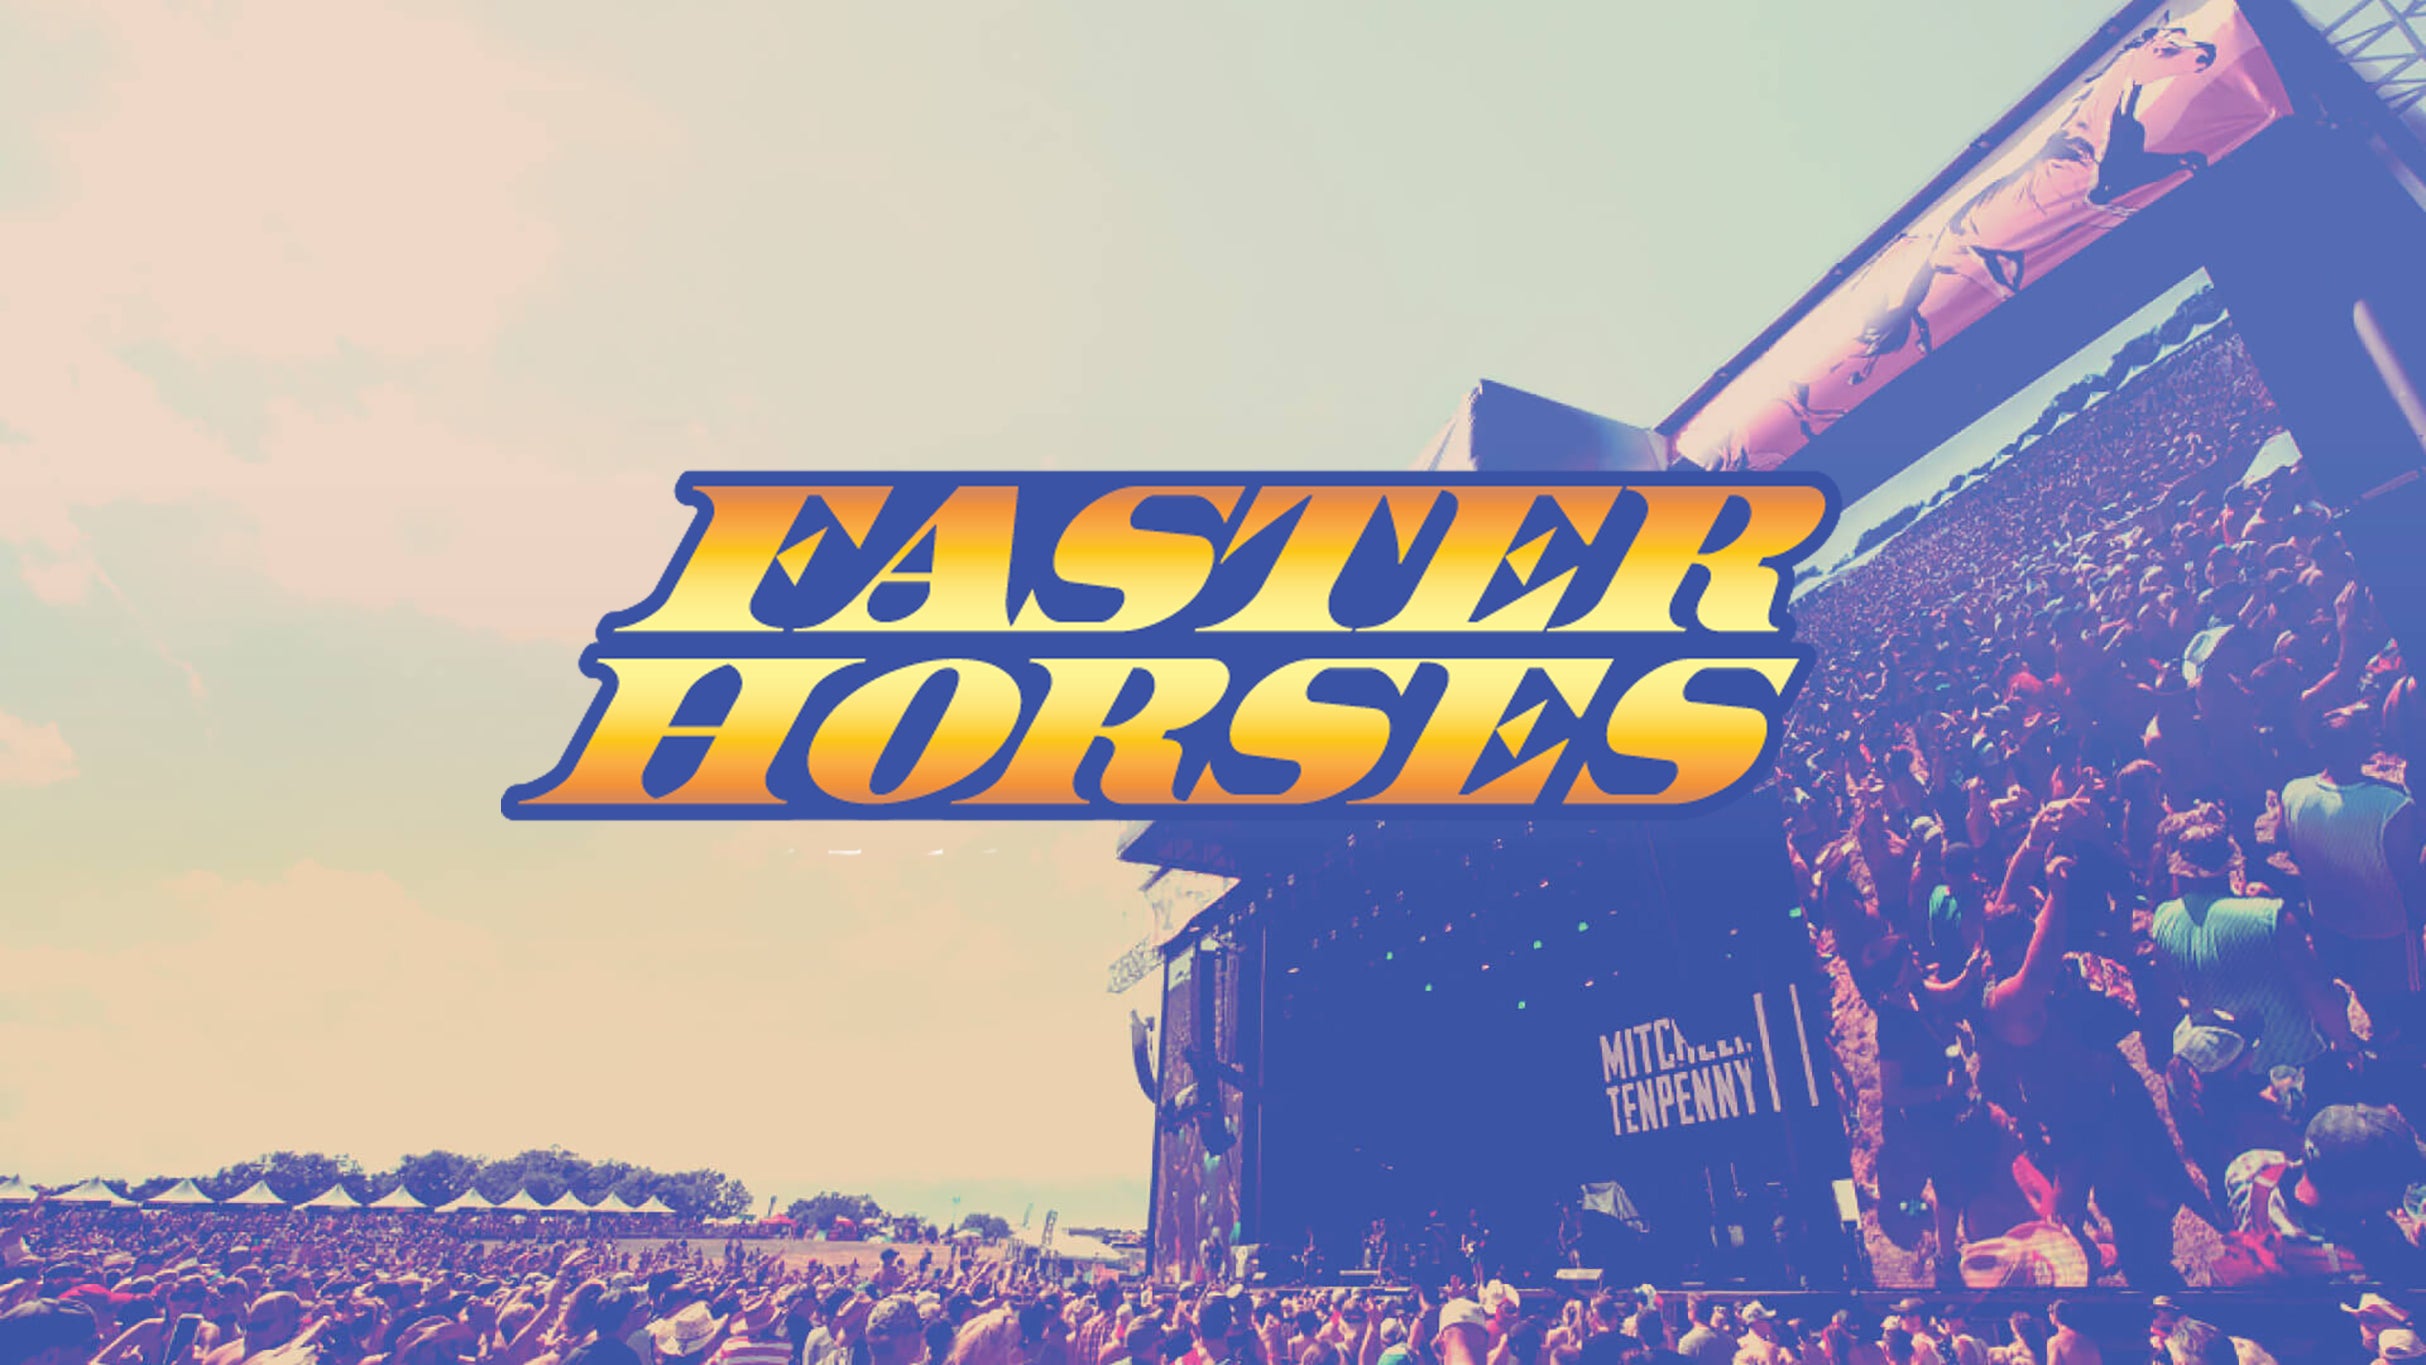 Faster Horses Festival at Michigan International Speedway